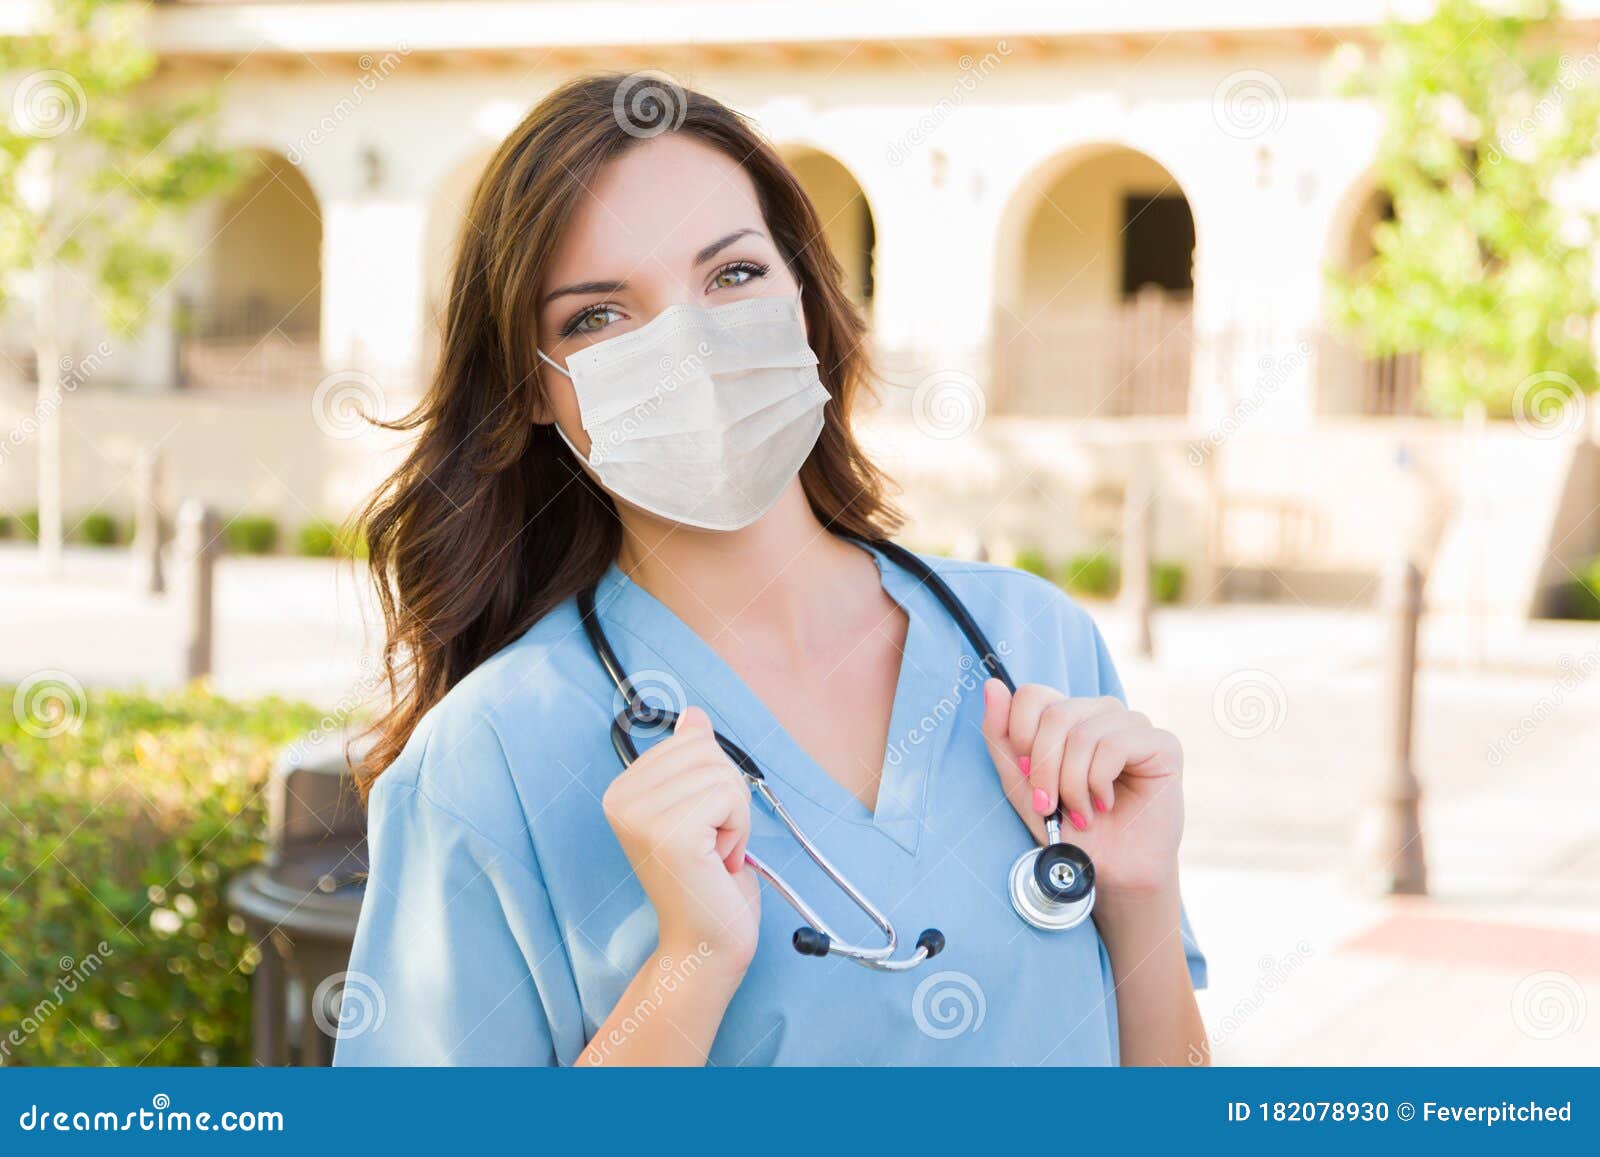 Female Doctor or Nurse Wearing Protective Face Mask Stock Photo - Image